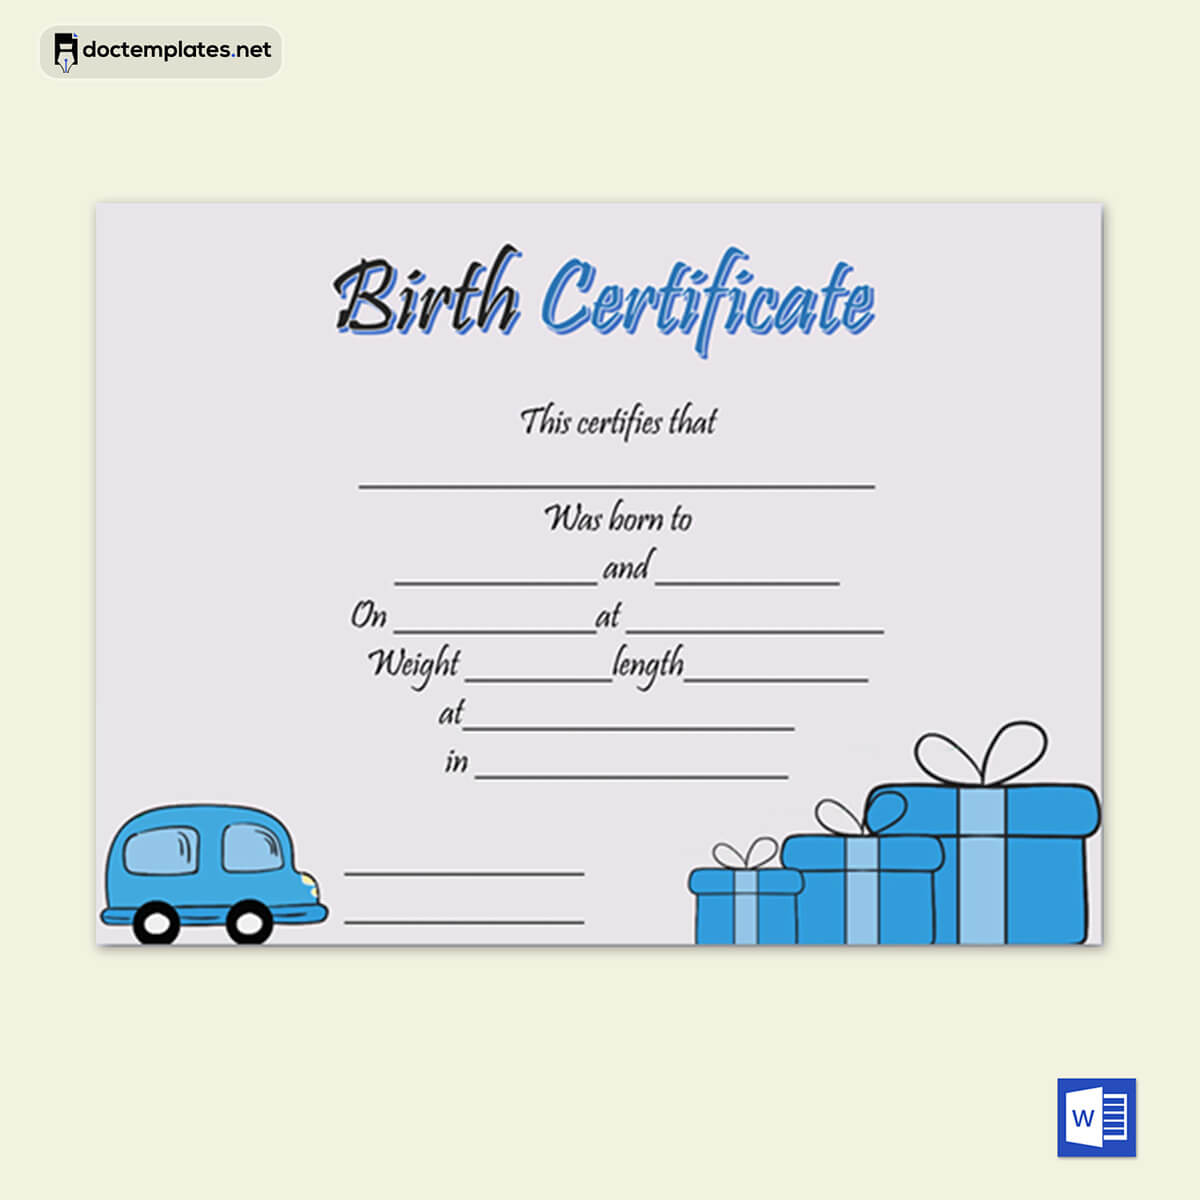 Image of Blank birth certificate PDF
Blank birth certificate PDF 02